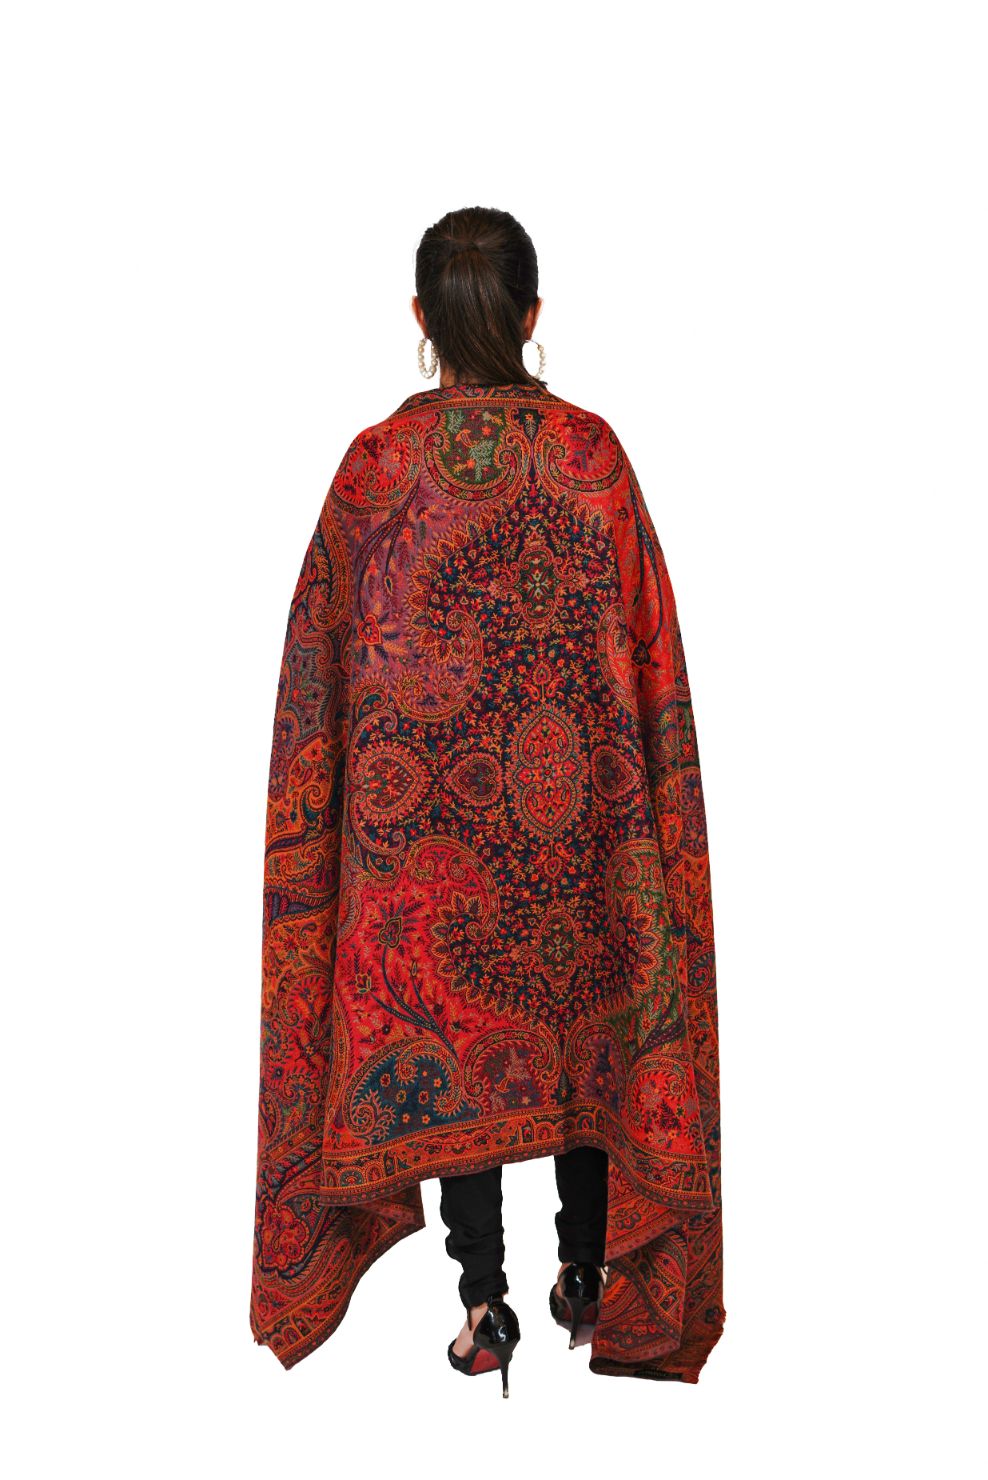 Pashmina Faux Multicolored Traditional Kalamkari Shawl for Women